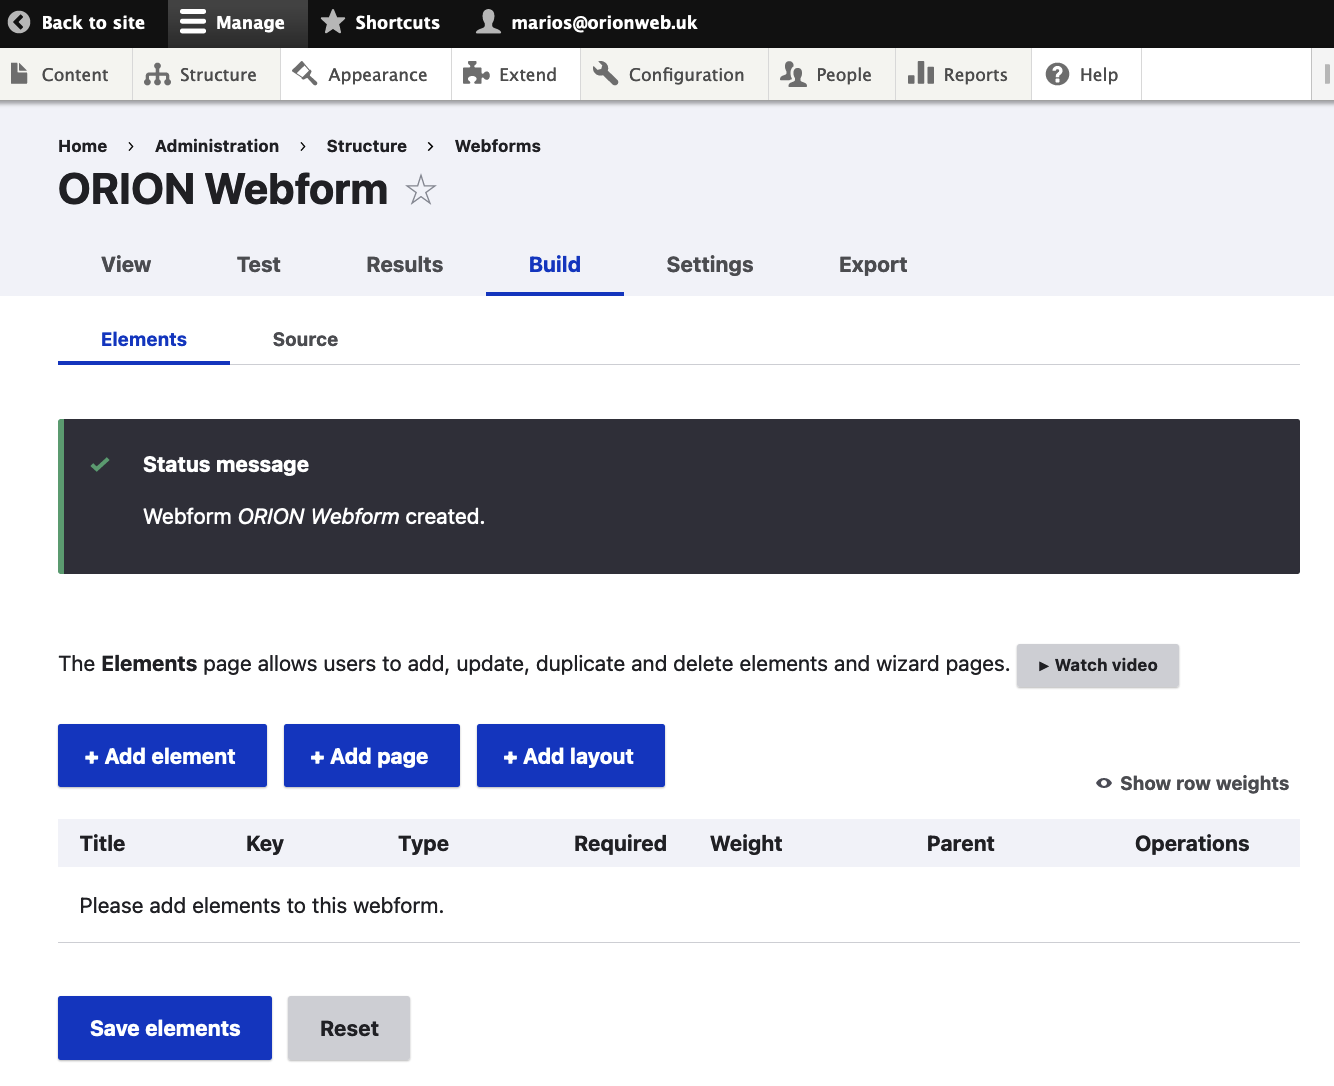 ORION Webform screen